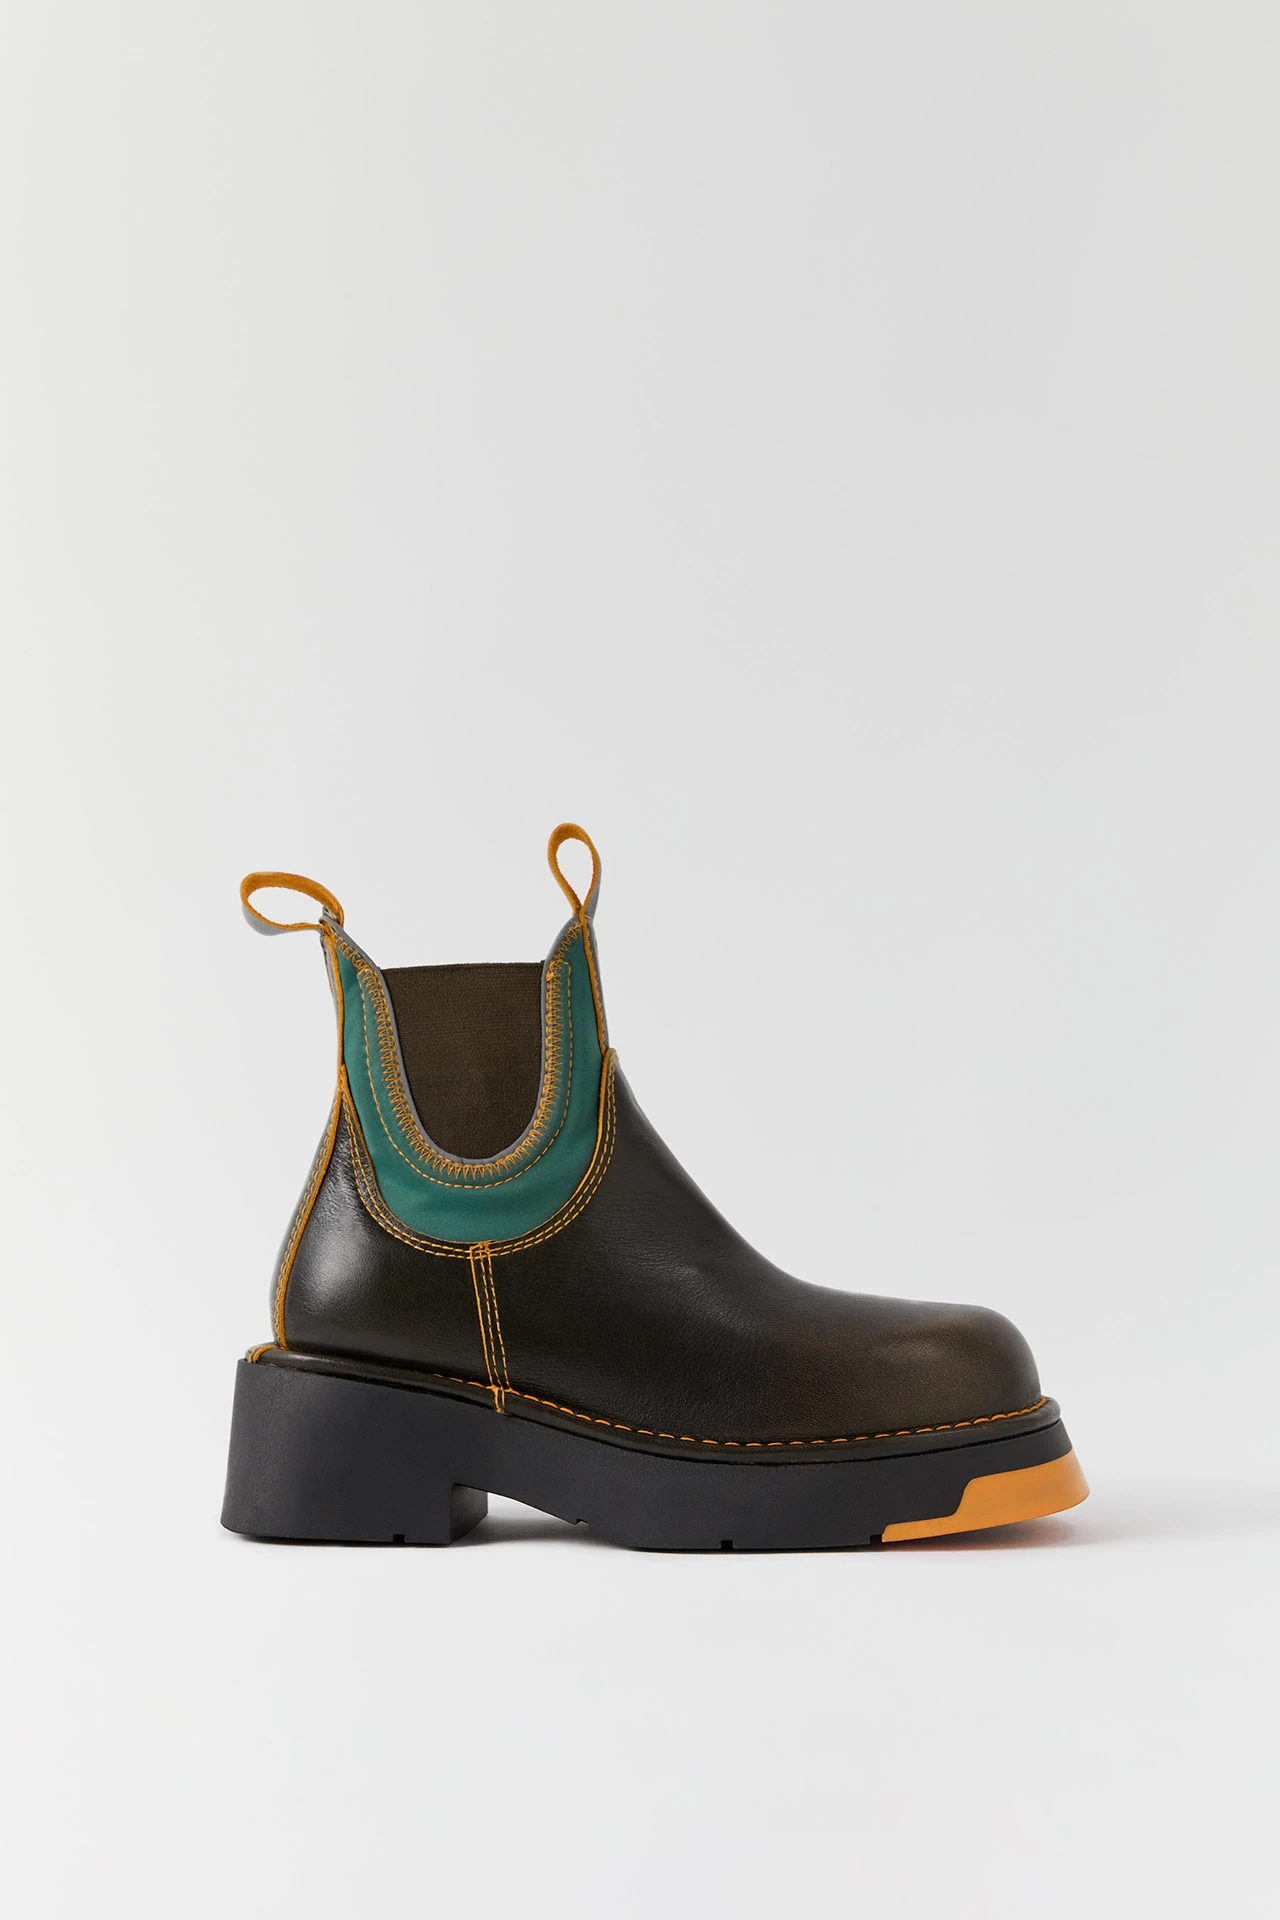 miista-kaya-brown-orange-ankle-boots-01